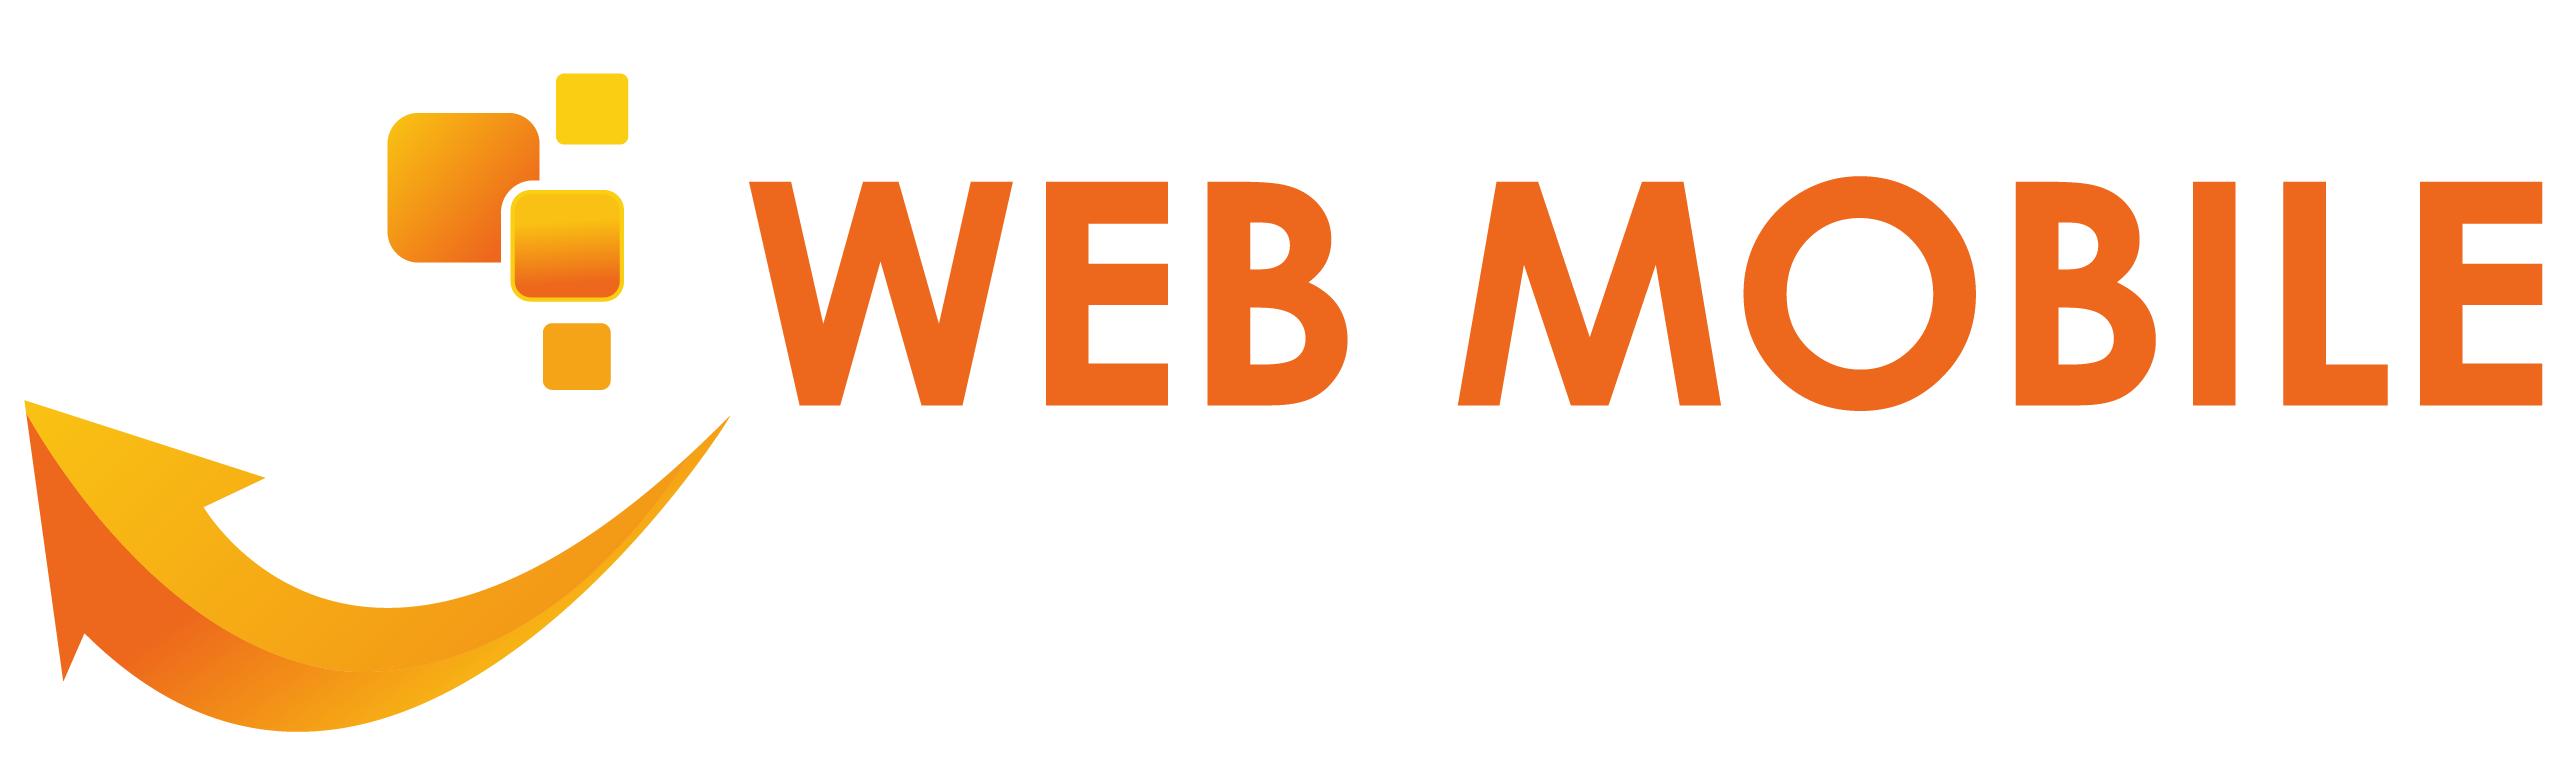 Web Mobile Solution logo